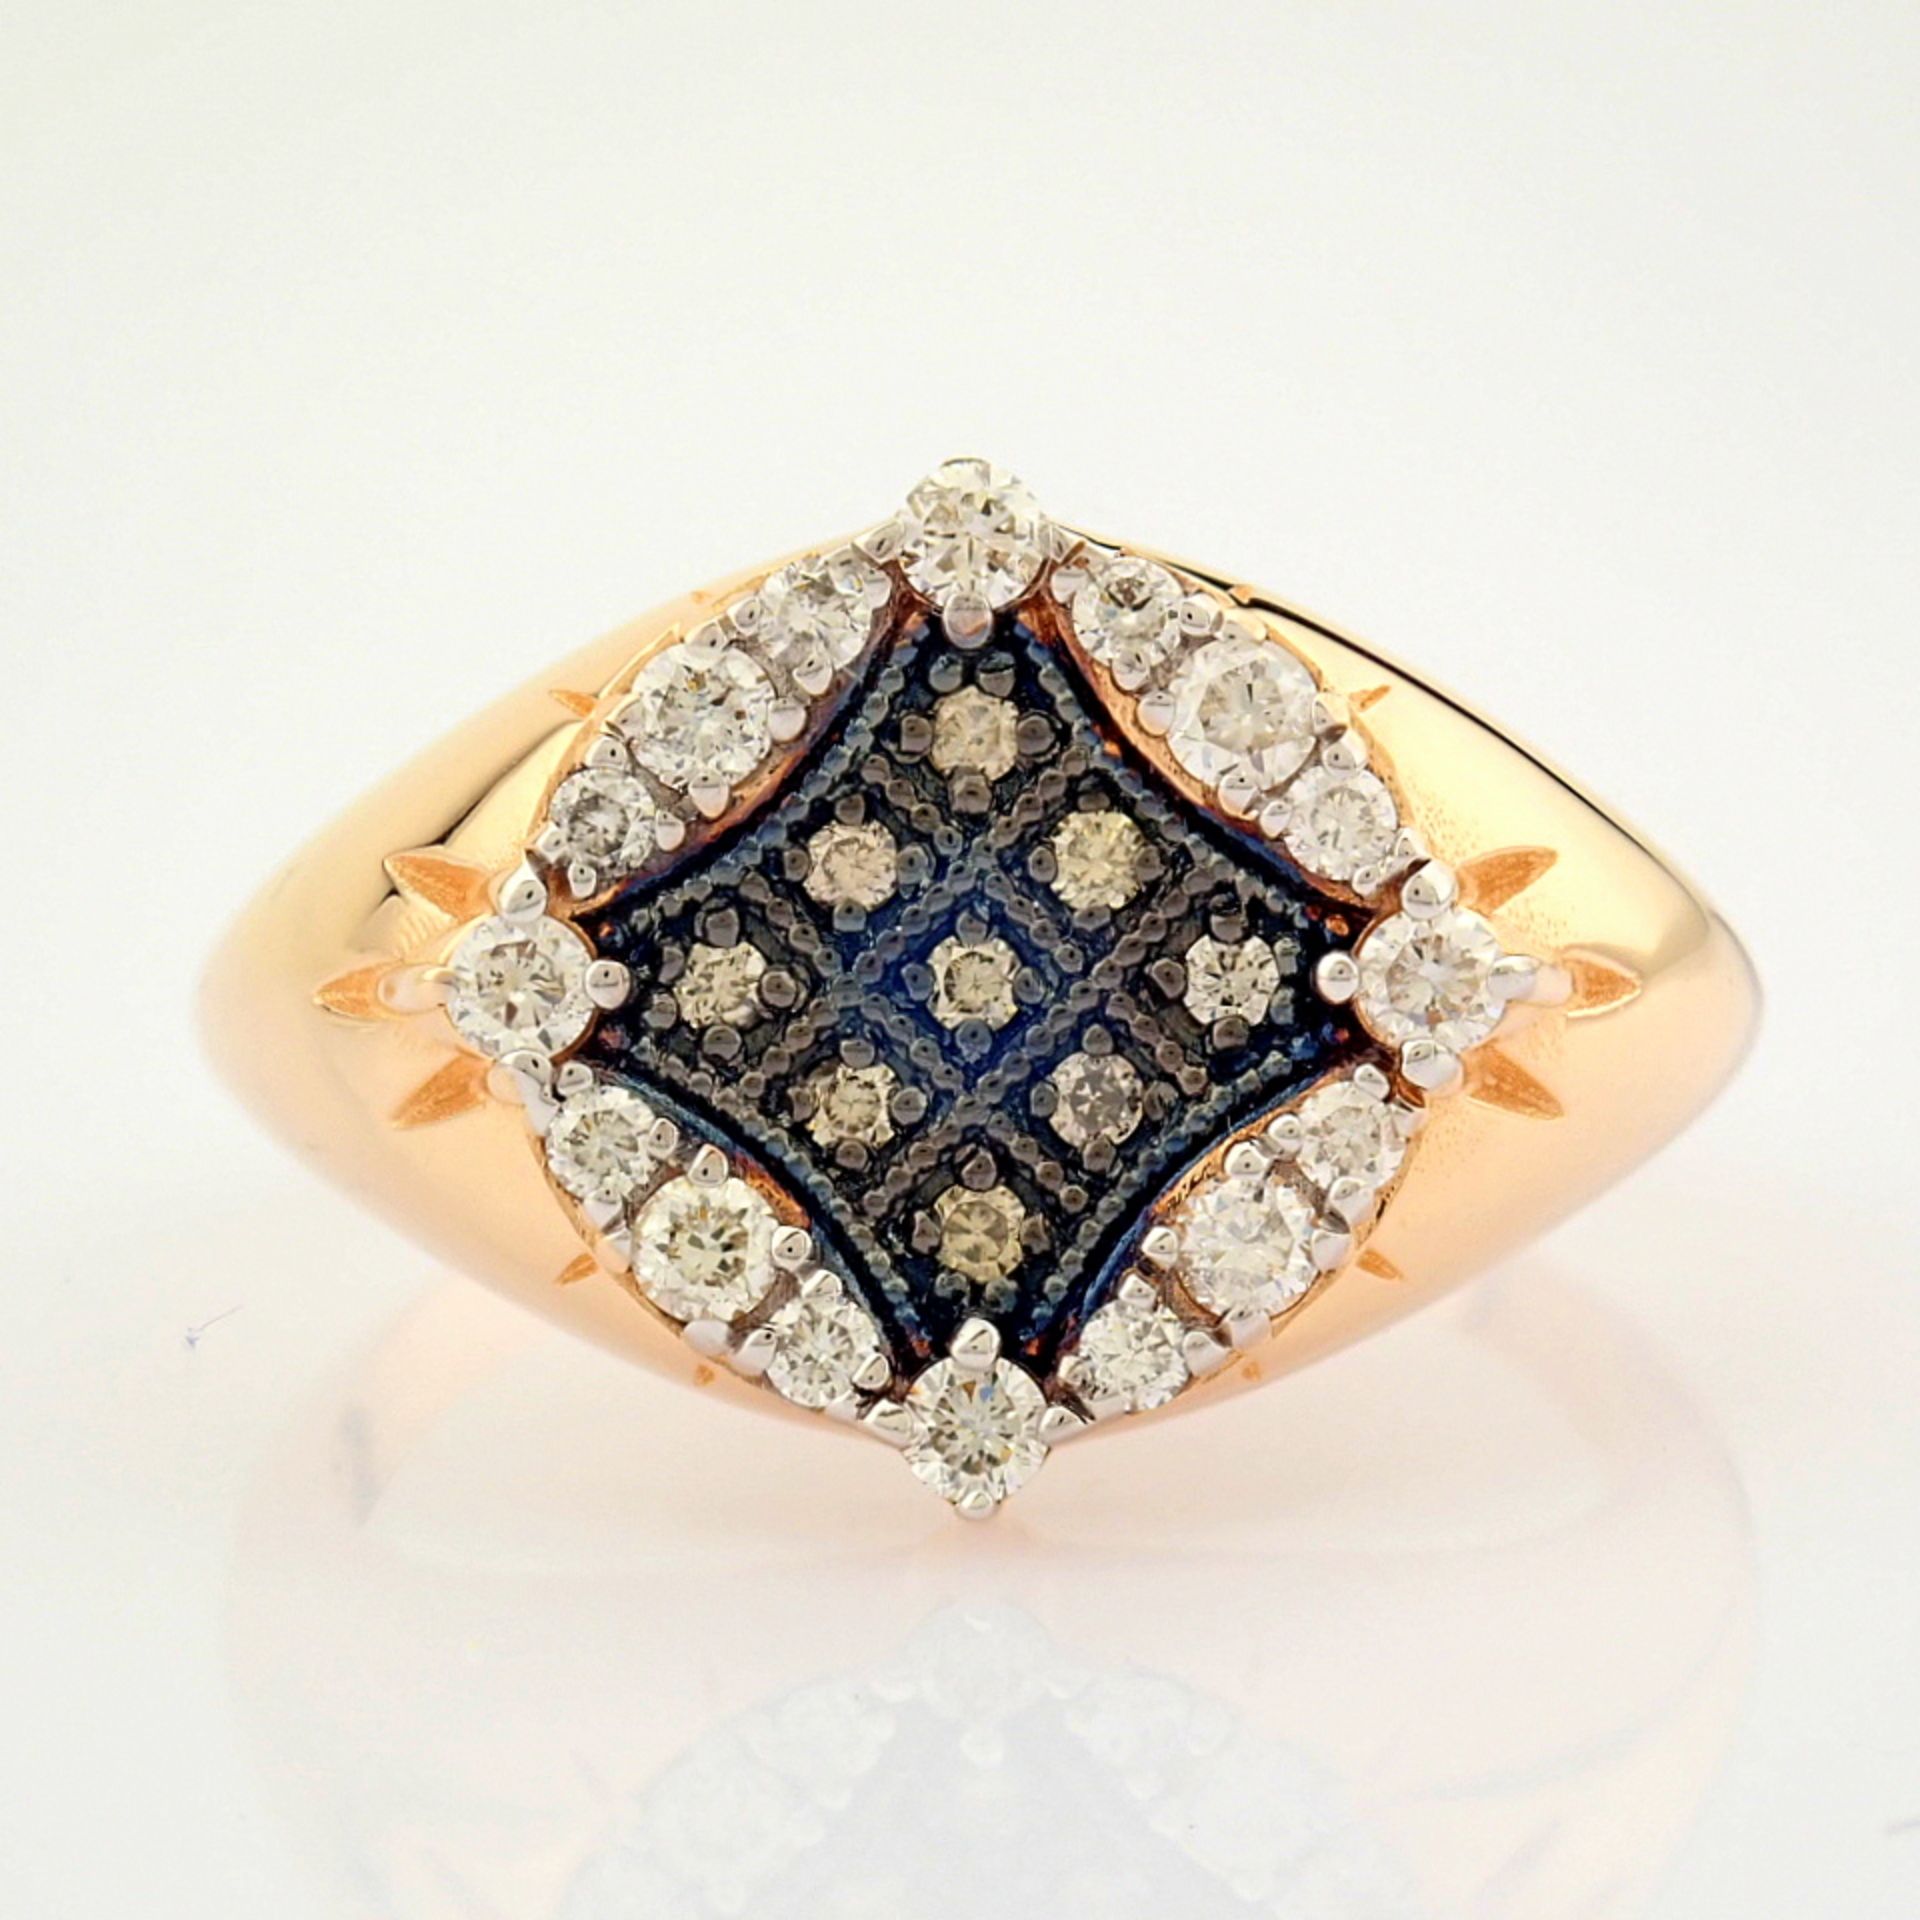 Certificated 14K Rose/Pink Gold Diamond & Brown Diamond Ring (Total 0.38 ct Stone) - Image 4 of 7